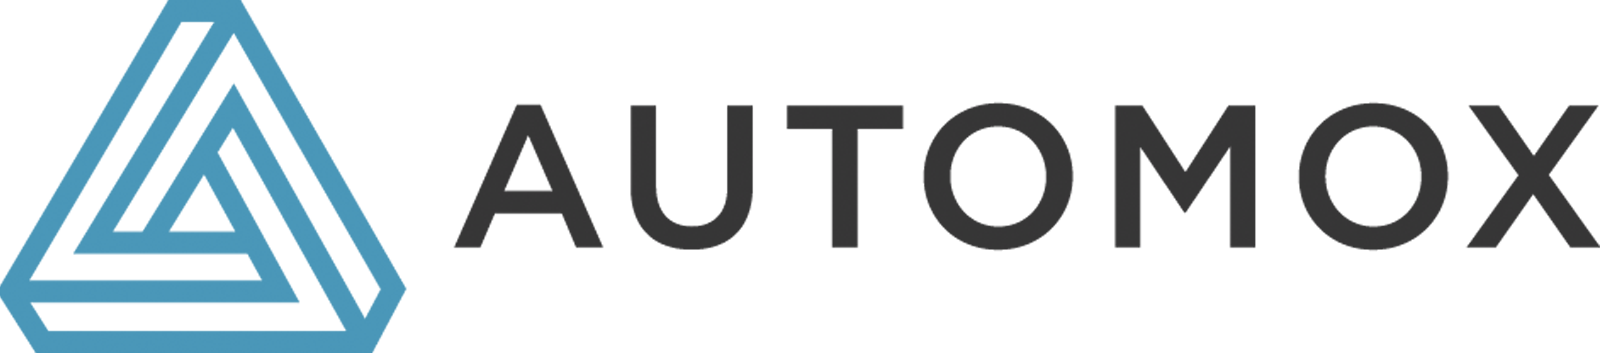 Automox vendor logo